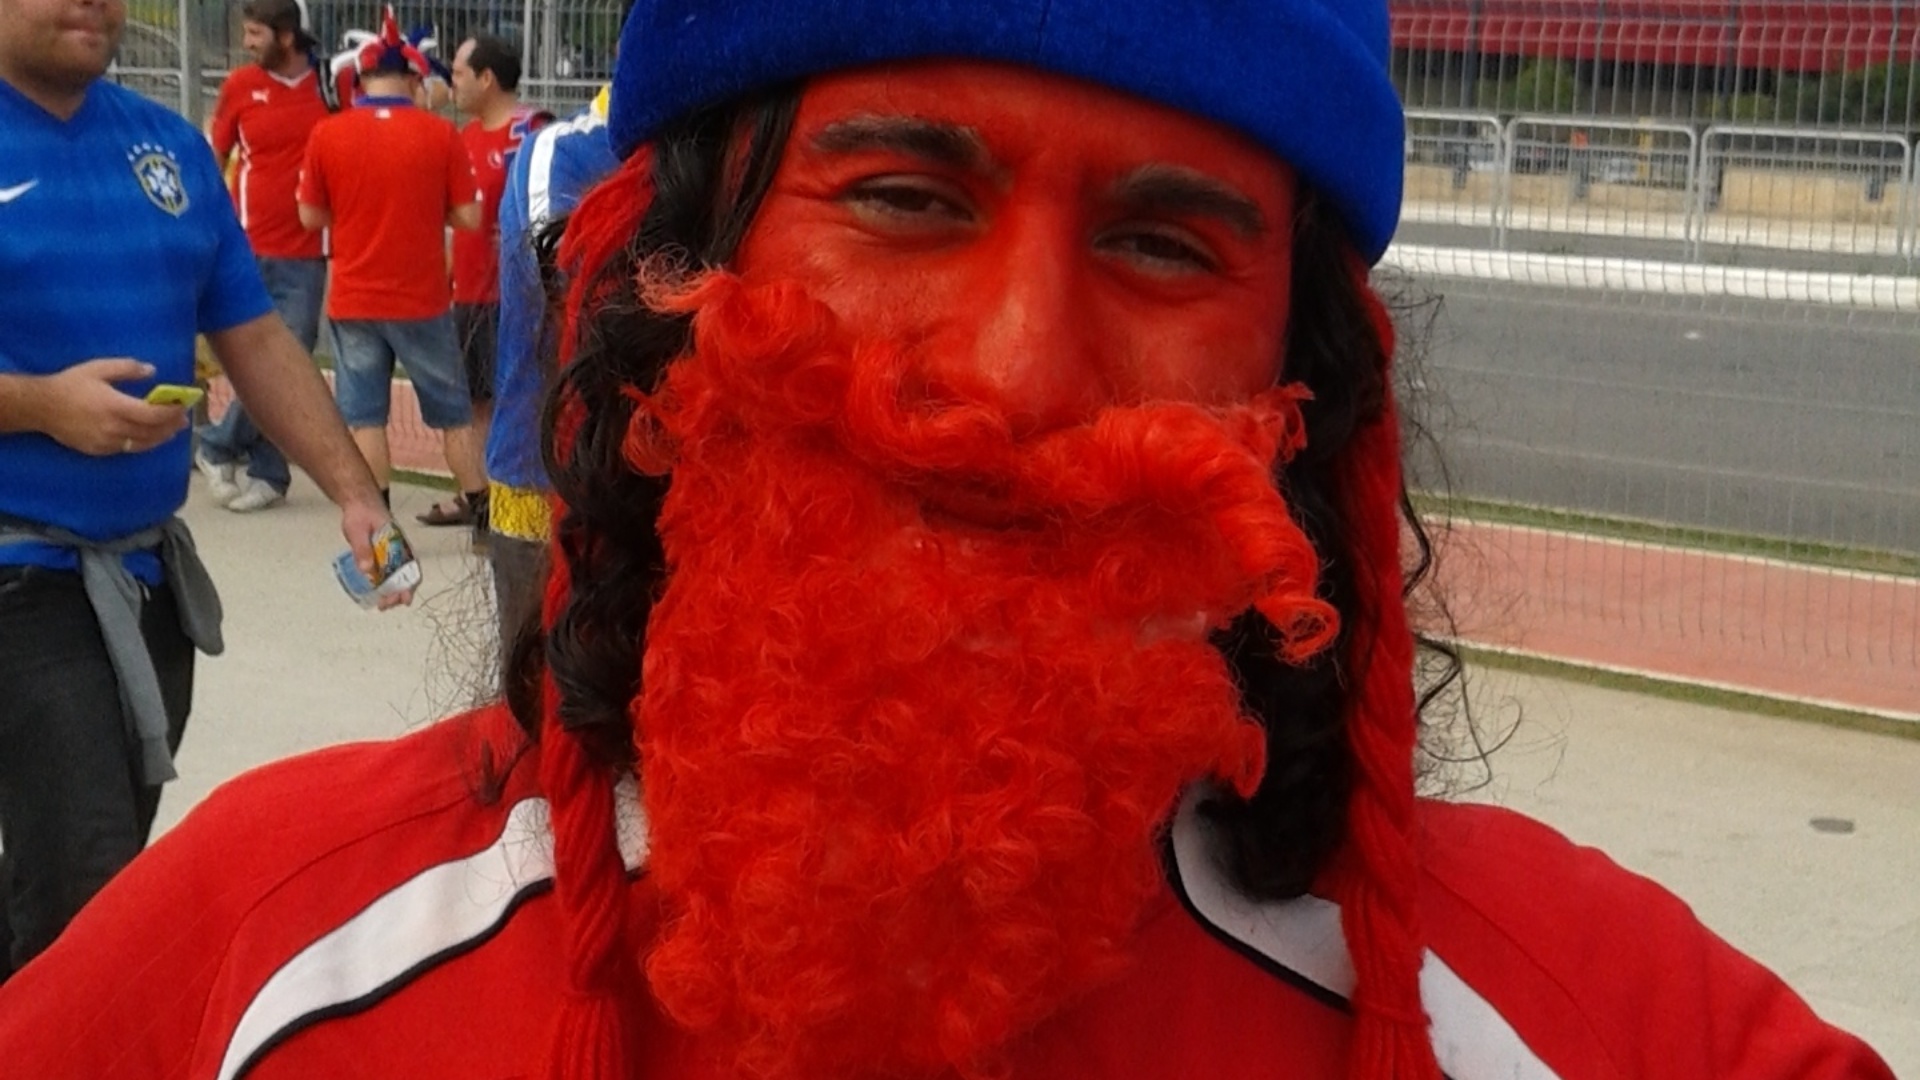 Torcedor chileno exibe rosto e barba pintados para partida contra Holanda